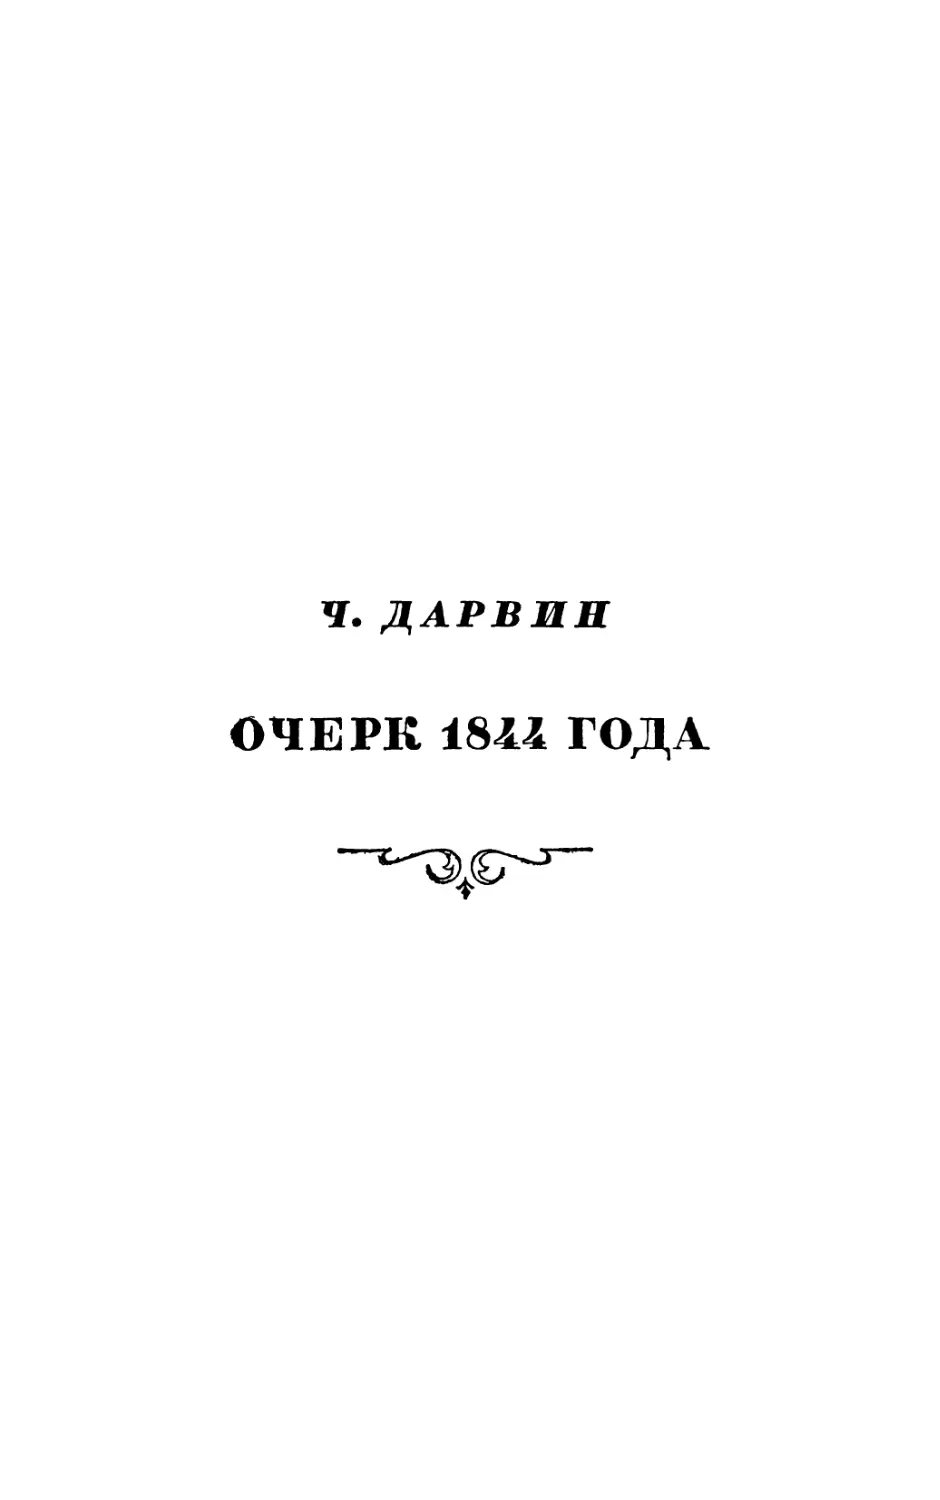 Очерк 1844 года